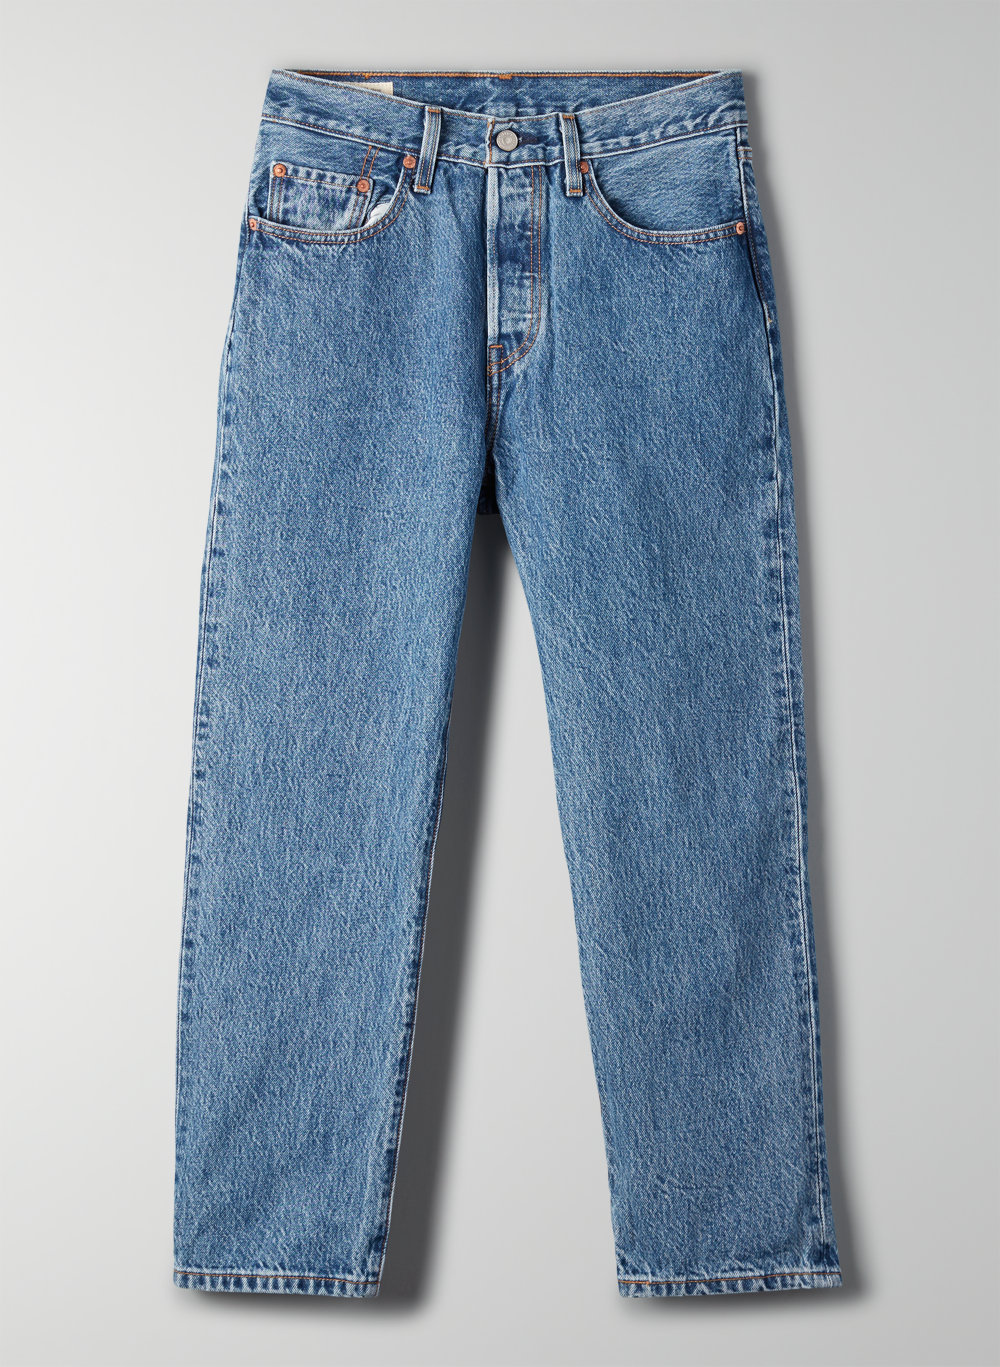 levis 501 crop jeans lost cause